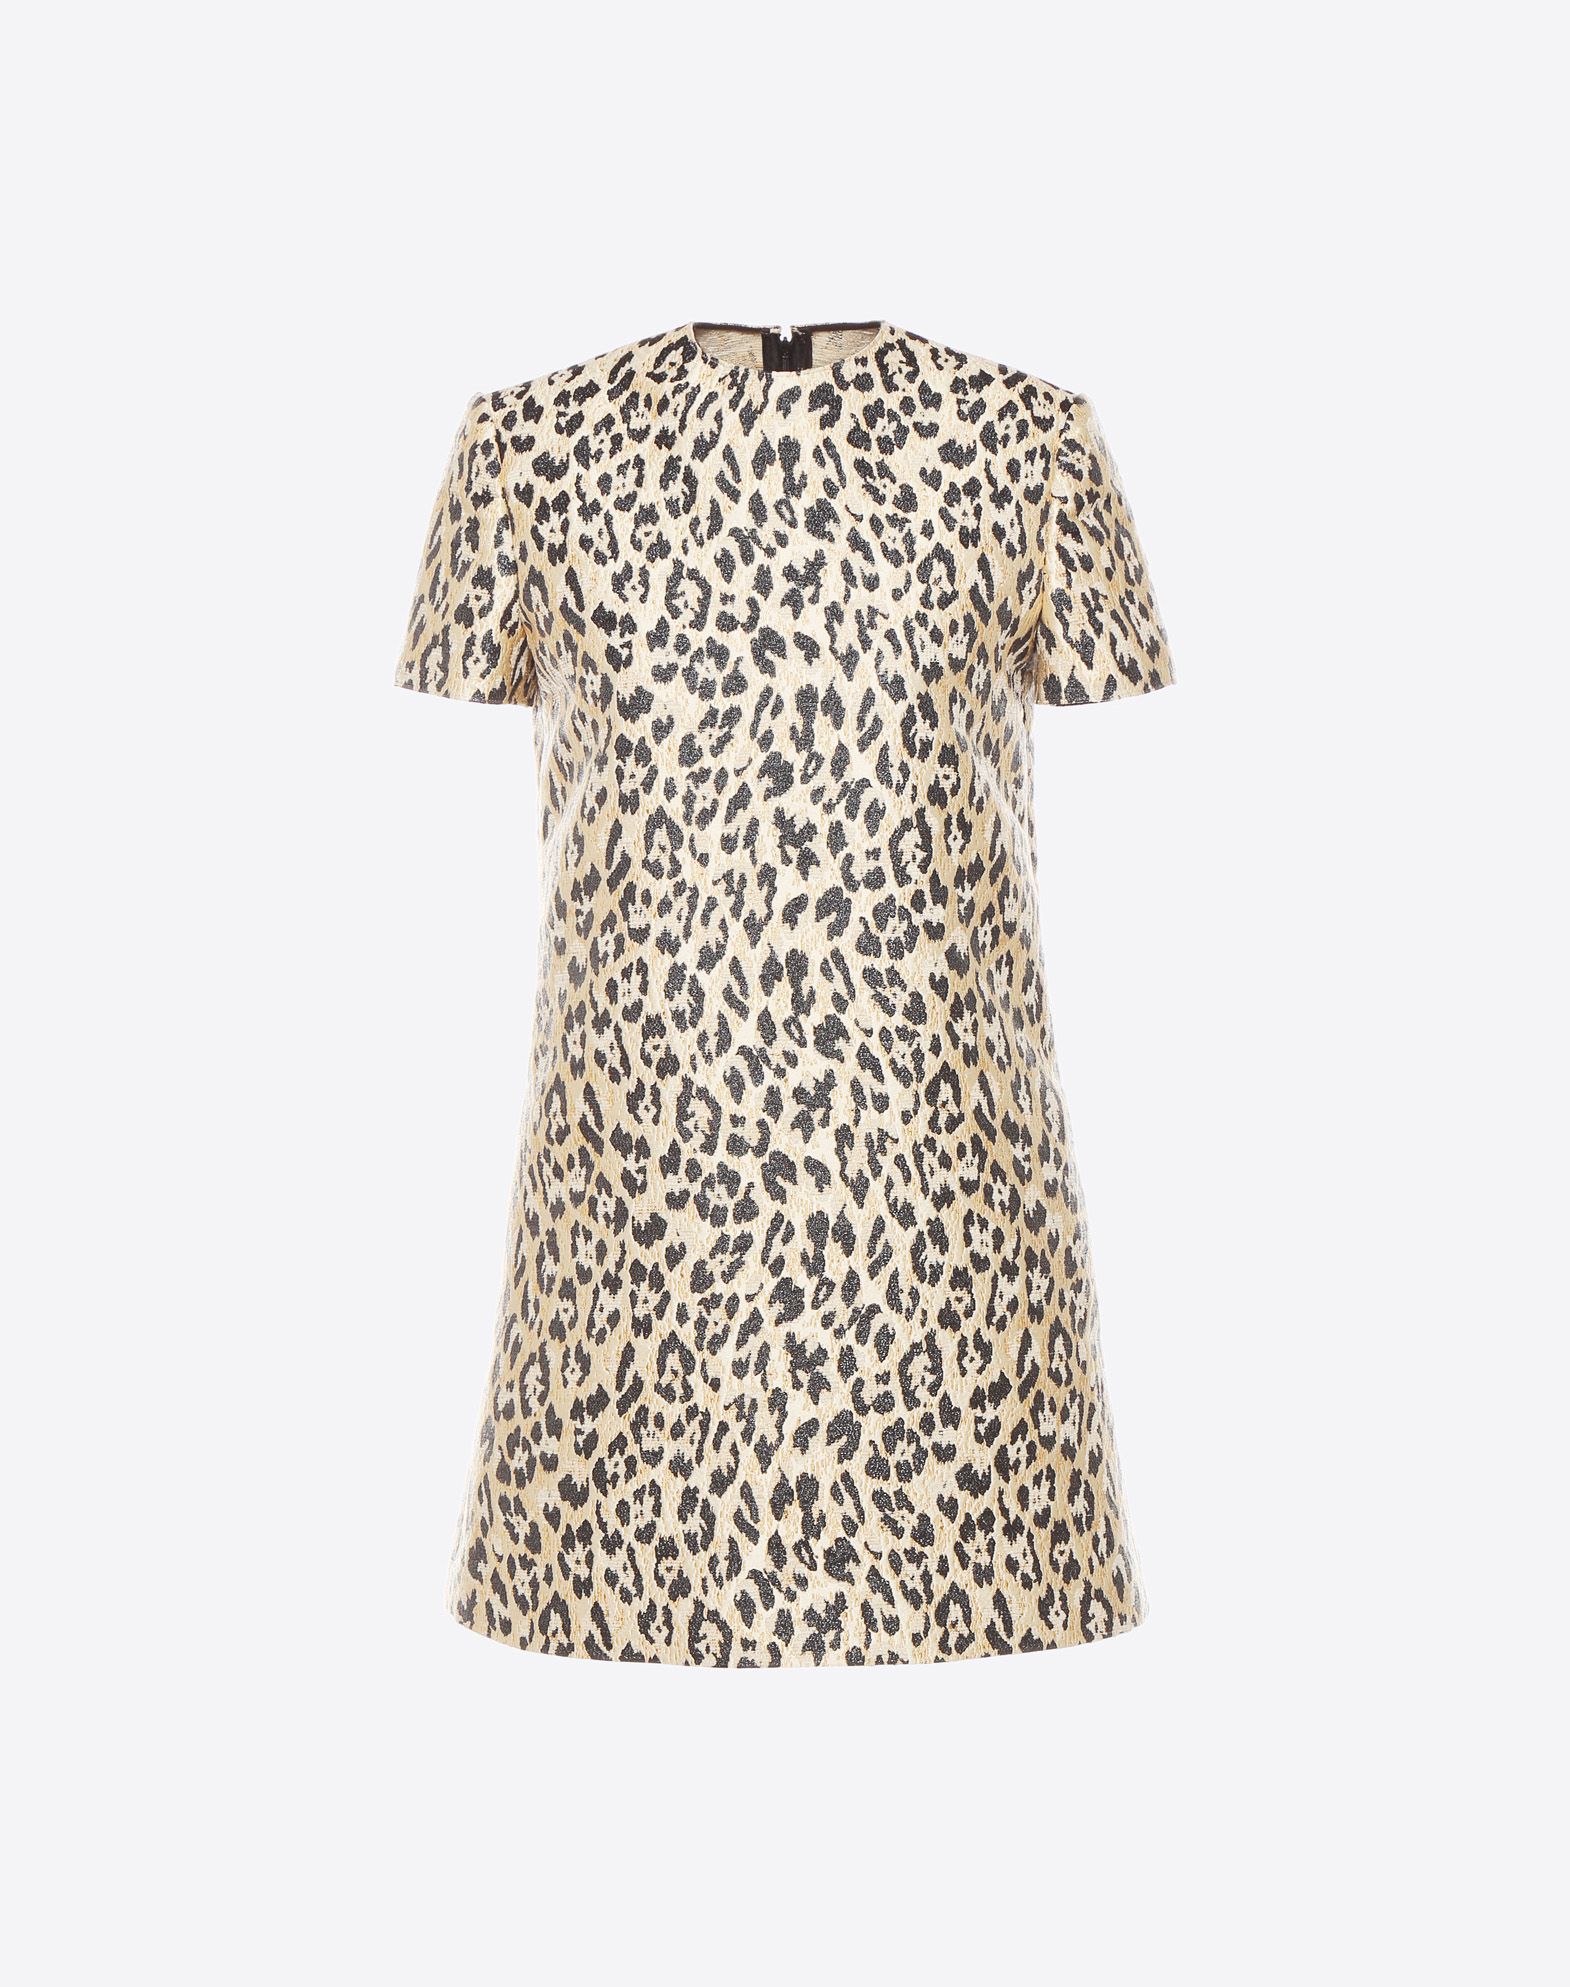 Wild Leopard Dress for Woman 